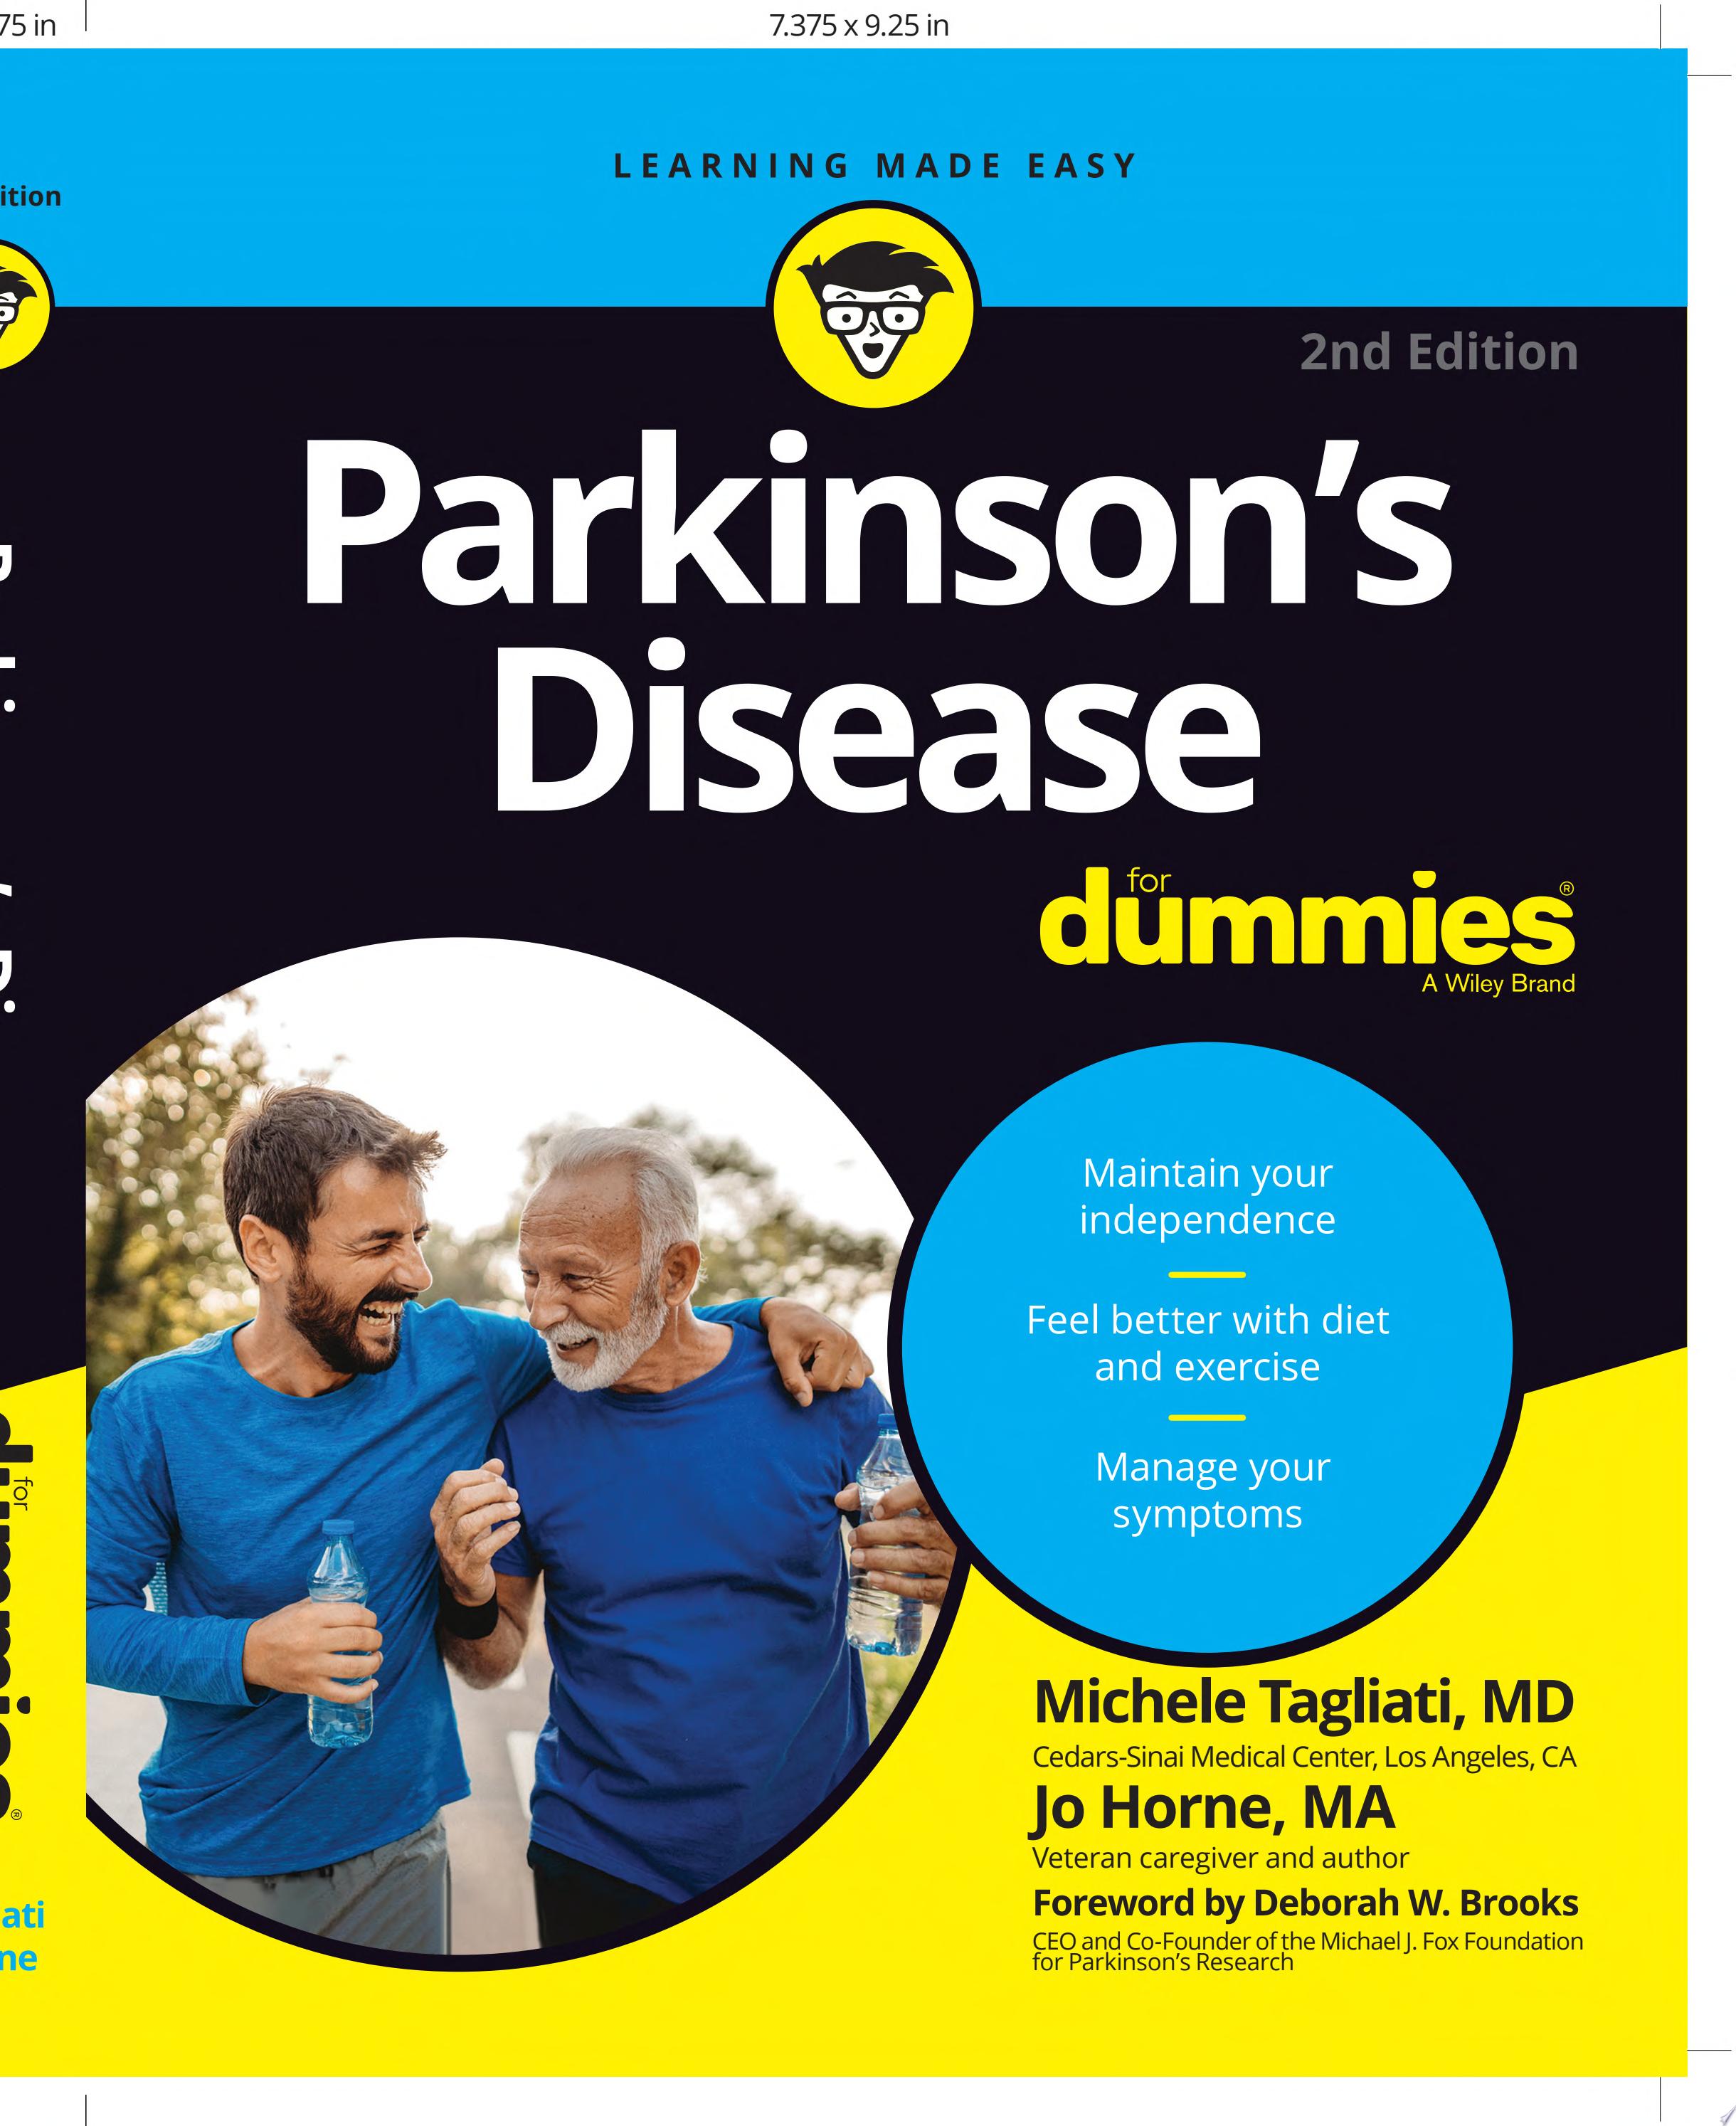 Image for "Parkinson's Disease For Dummies"